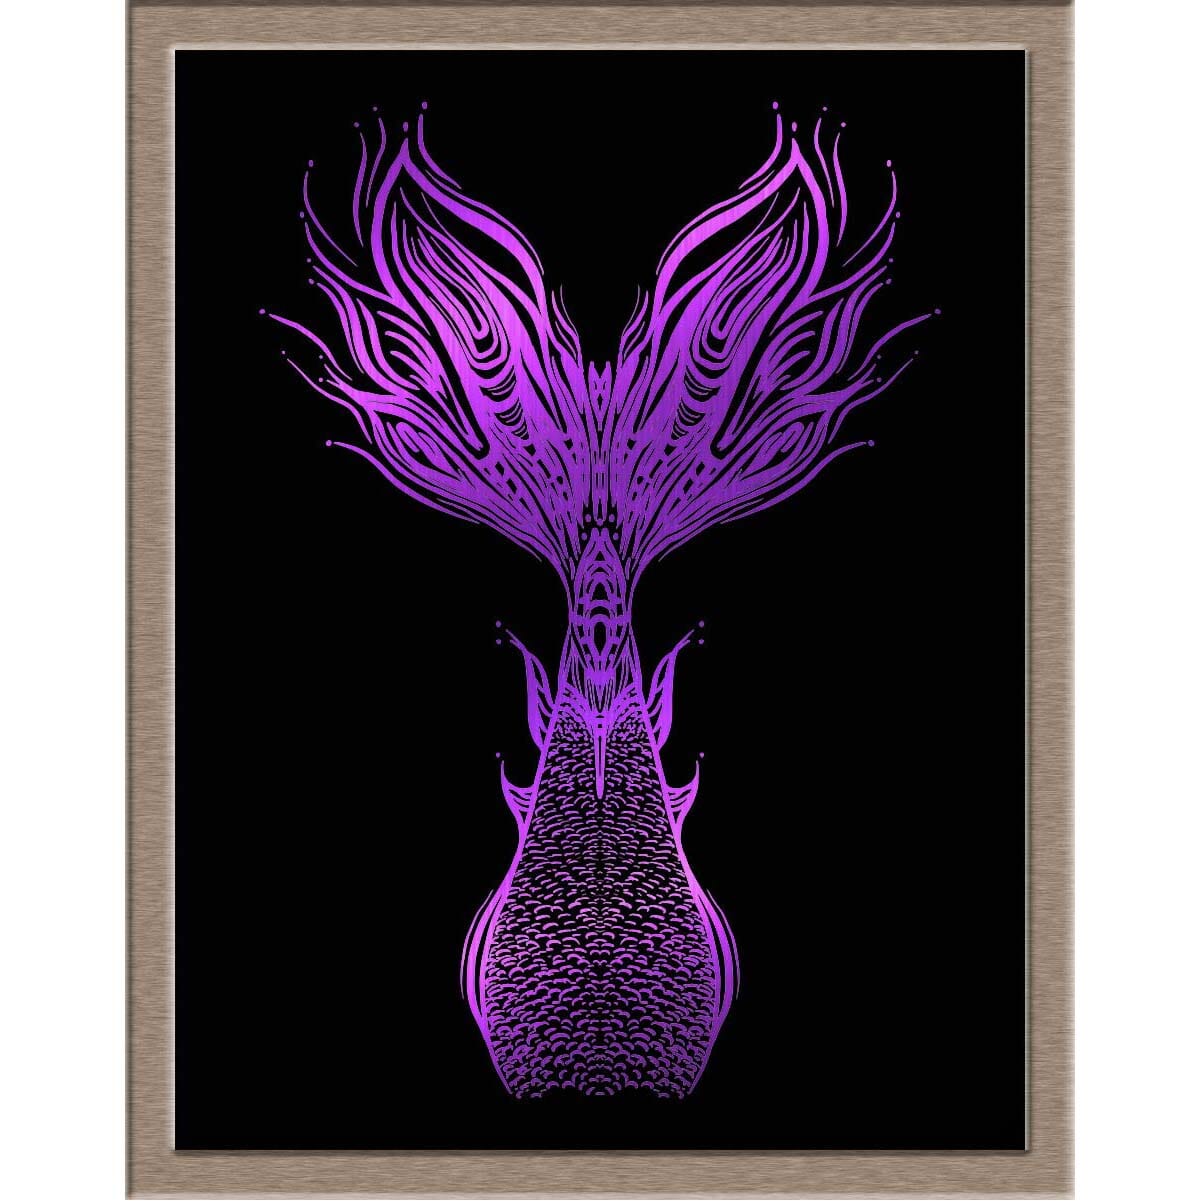 Mermaid Tail 1 Foiled Print Posters, Prints, & Visual Artwork JoyousJoyfulJoyness 